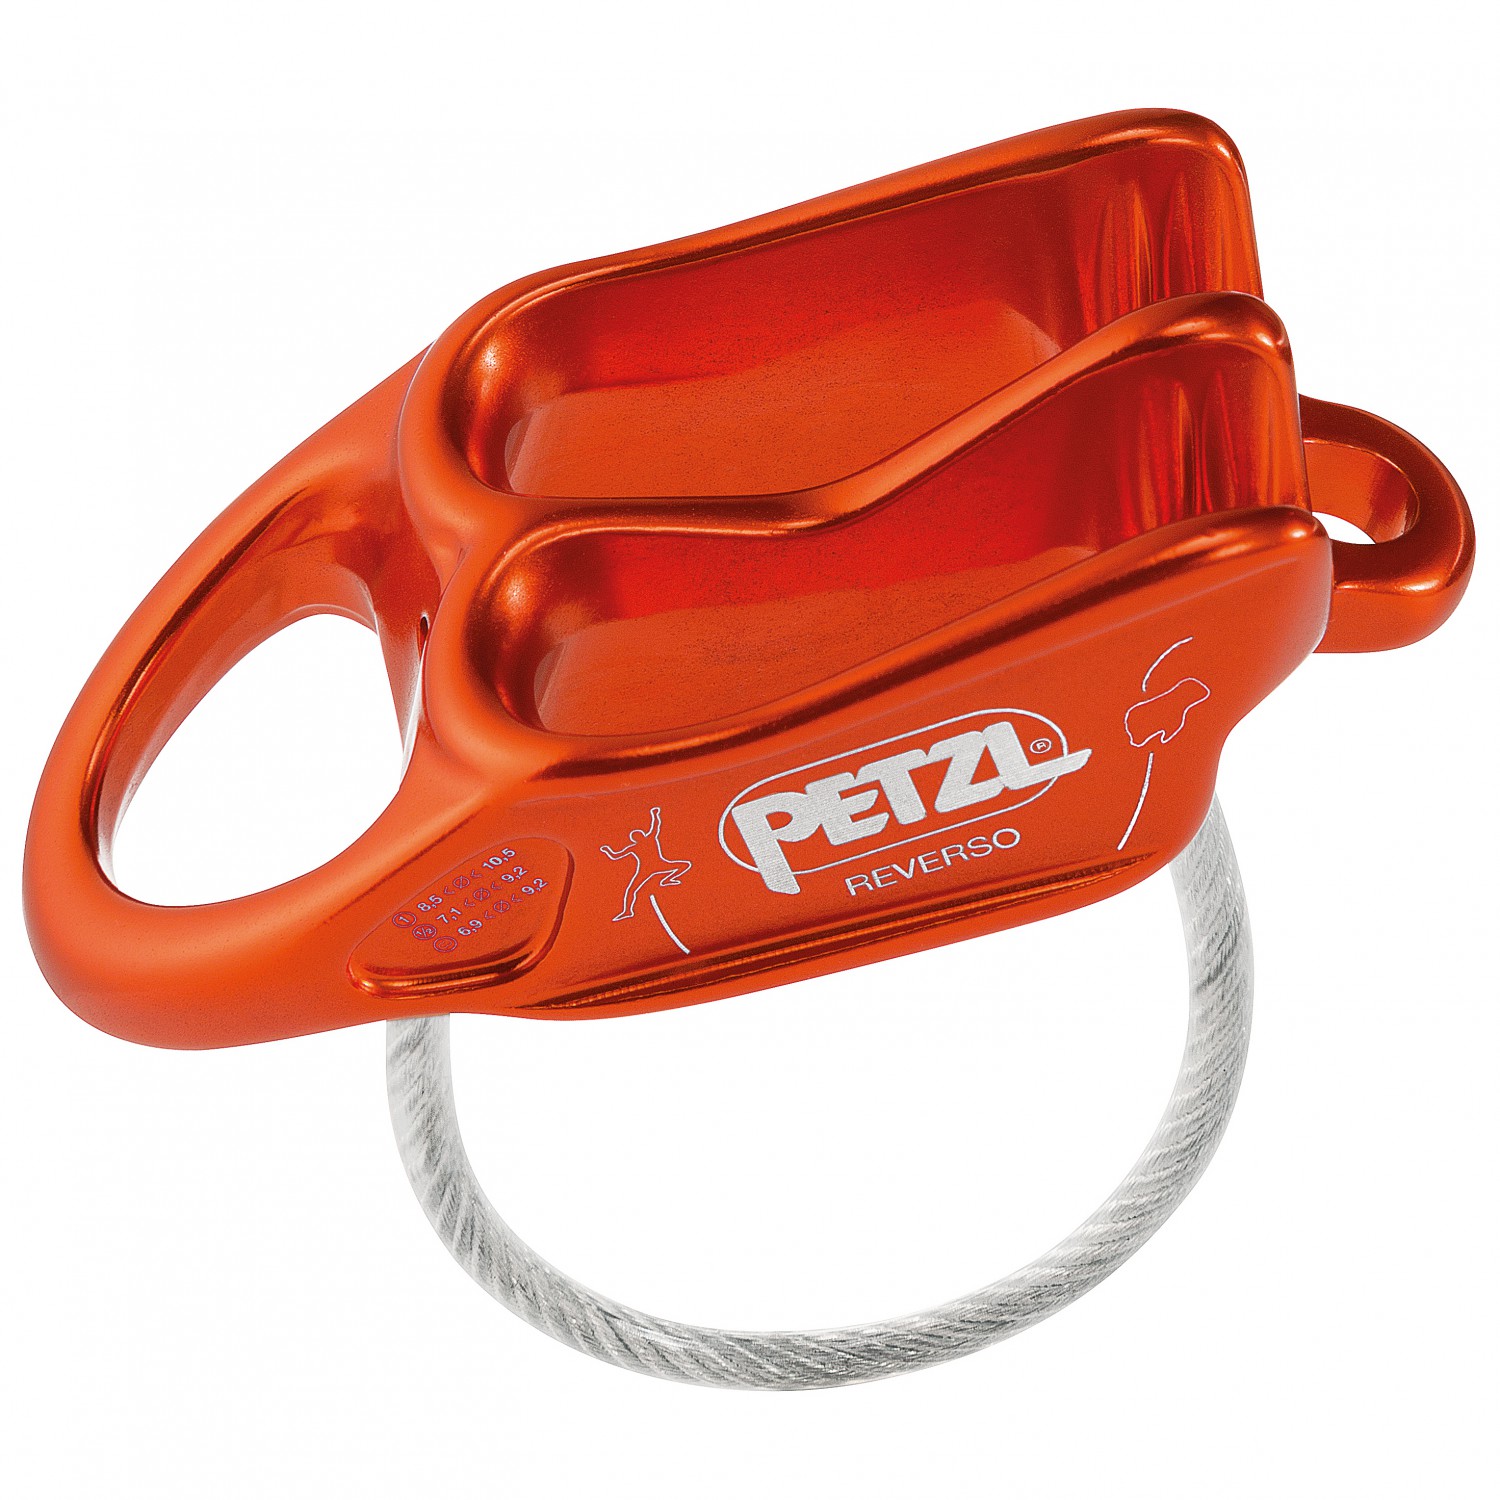 Photos - Climbing Gear Petzl Reverso Climbing Belay Rappel Device, Red Orange D17 AG 